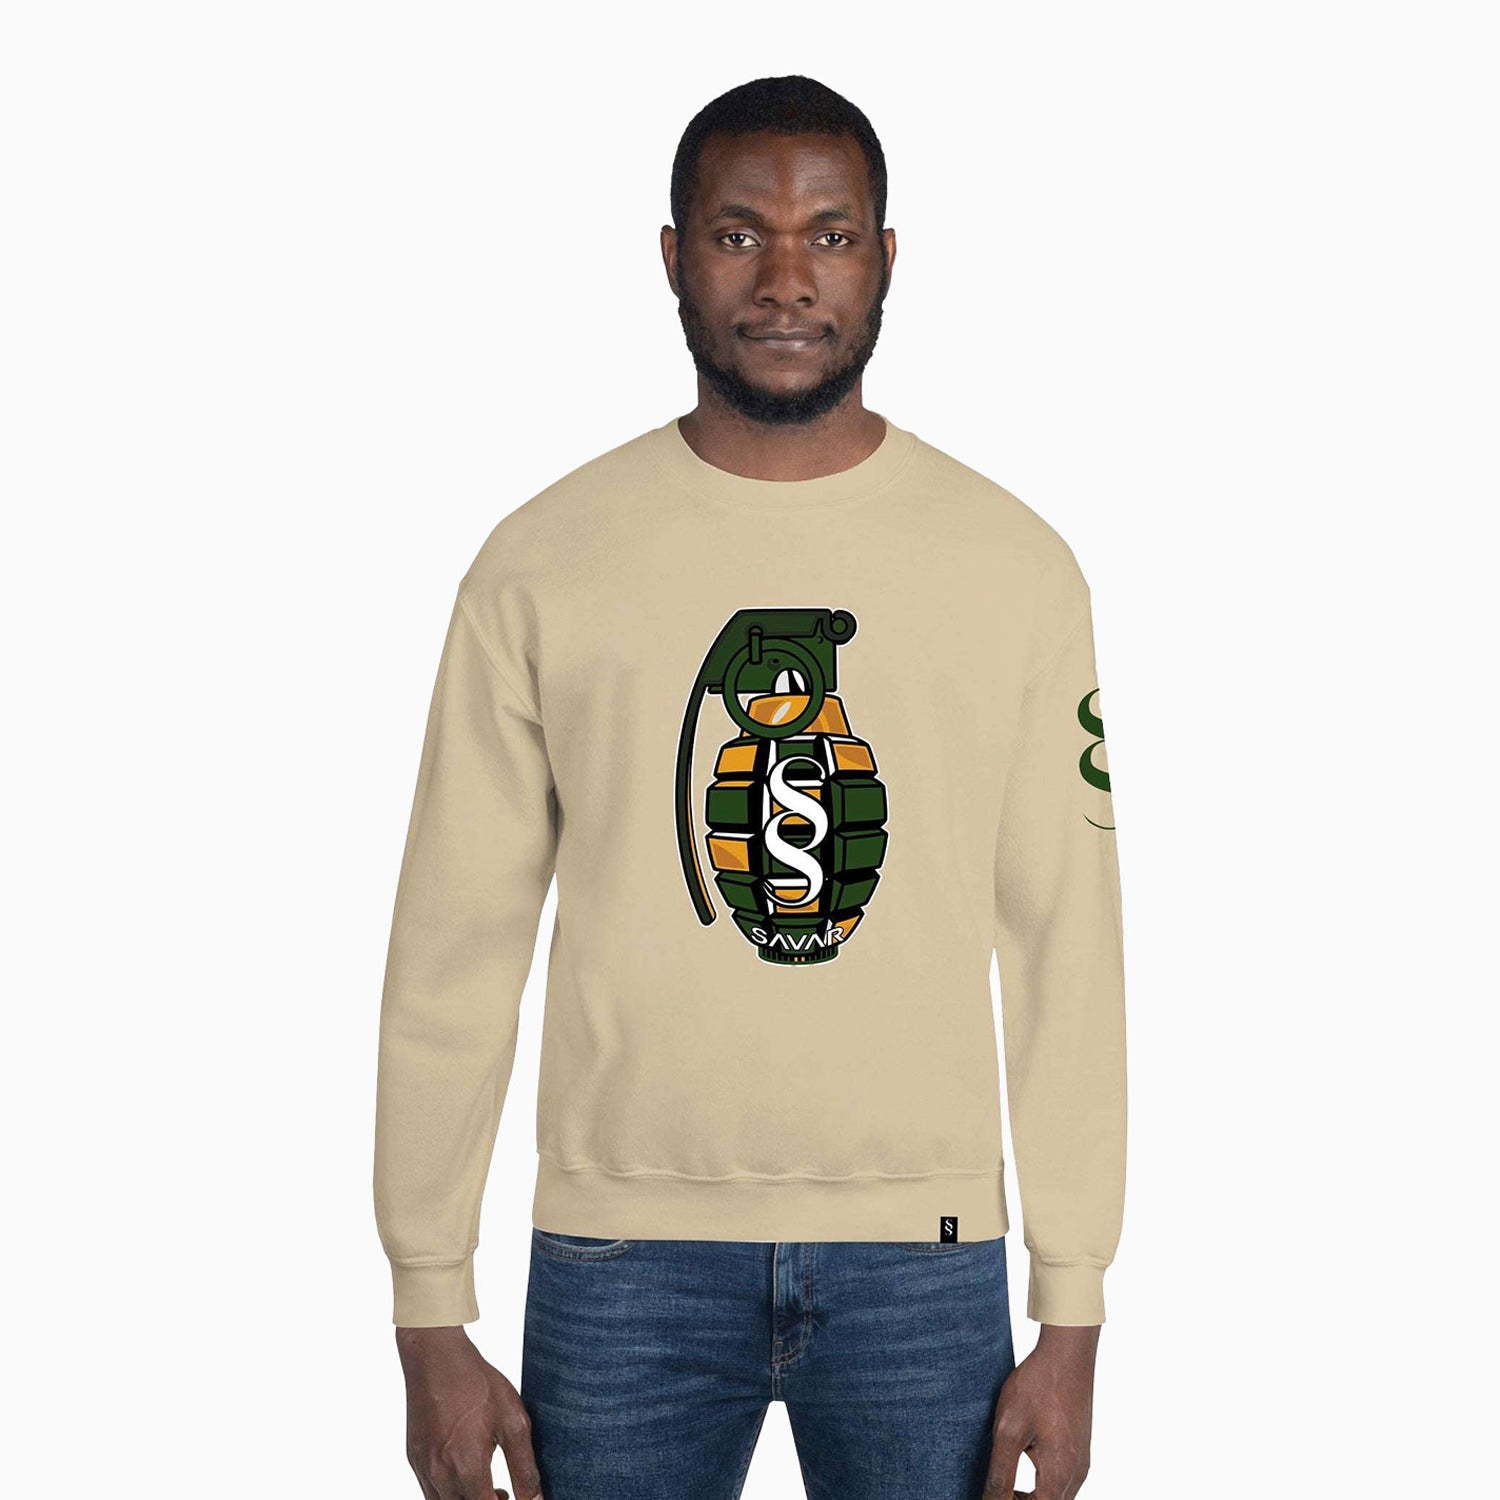 grenade-design-printed-crew-neck-khaki-sweatshirt-for-men-sc102-325